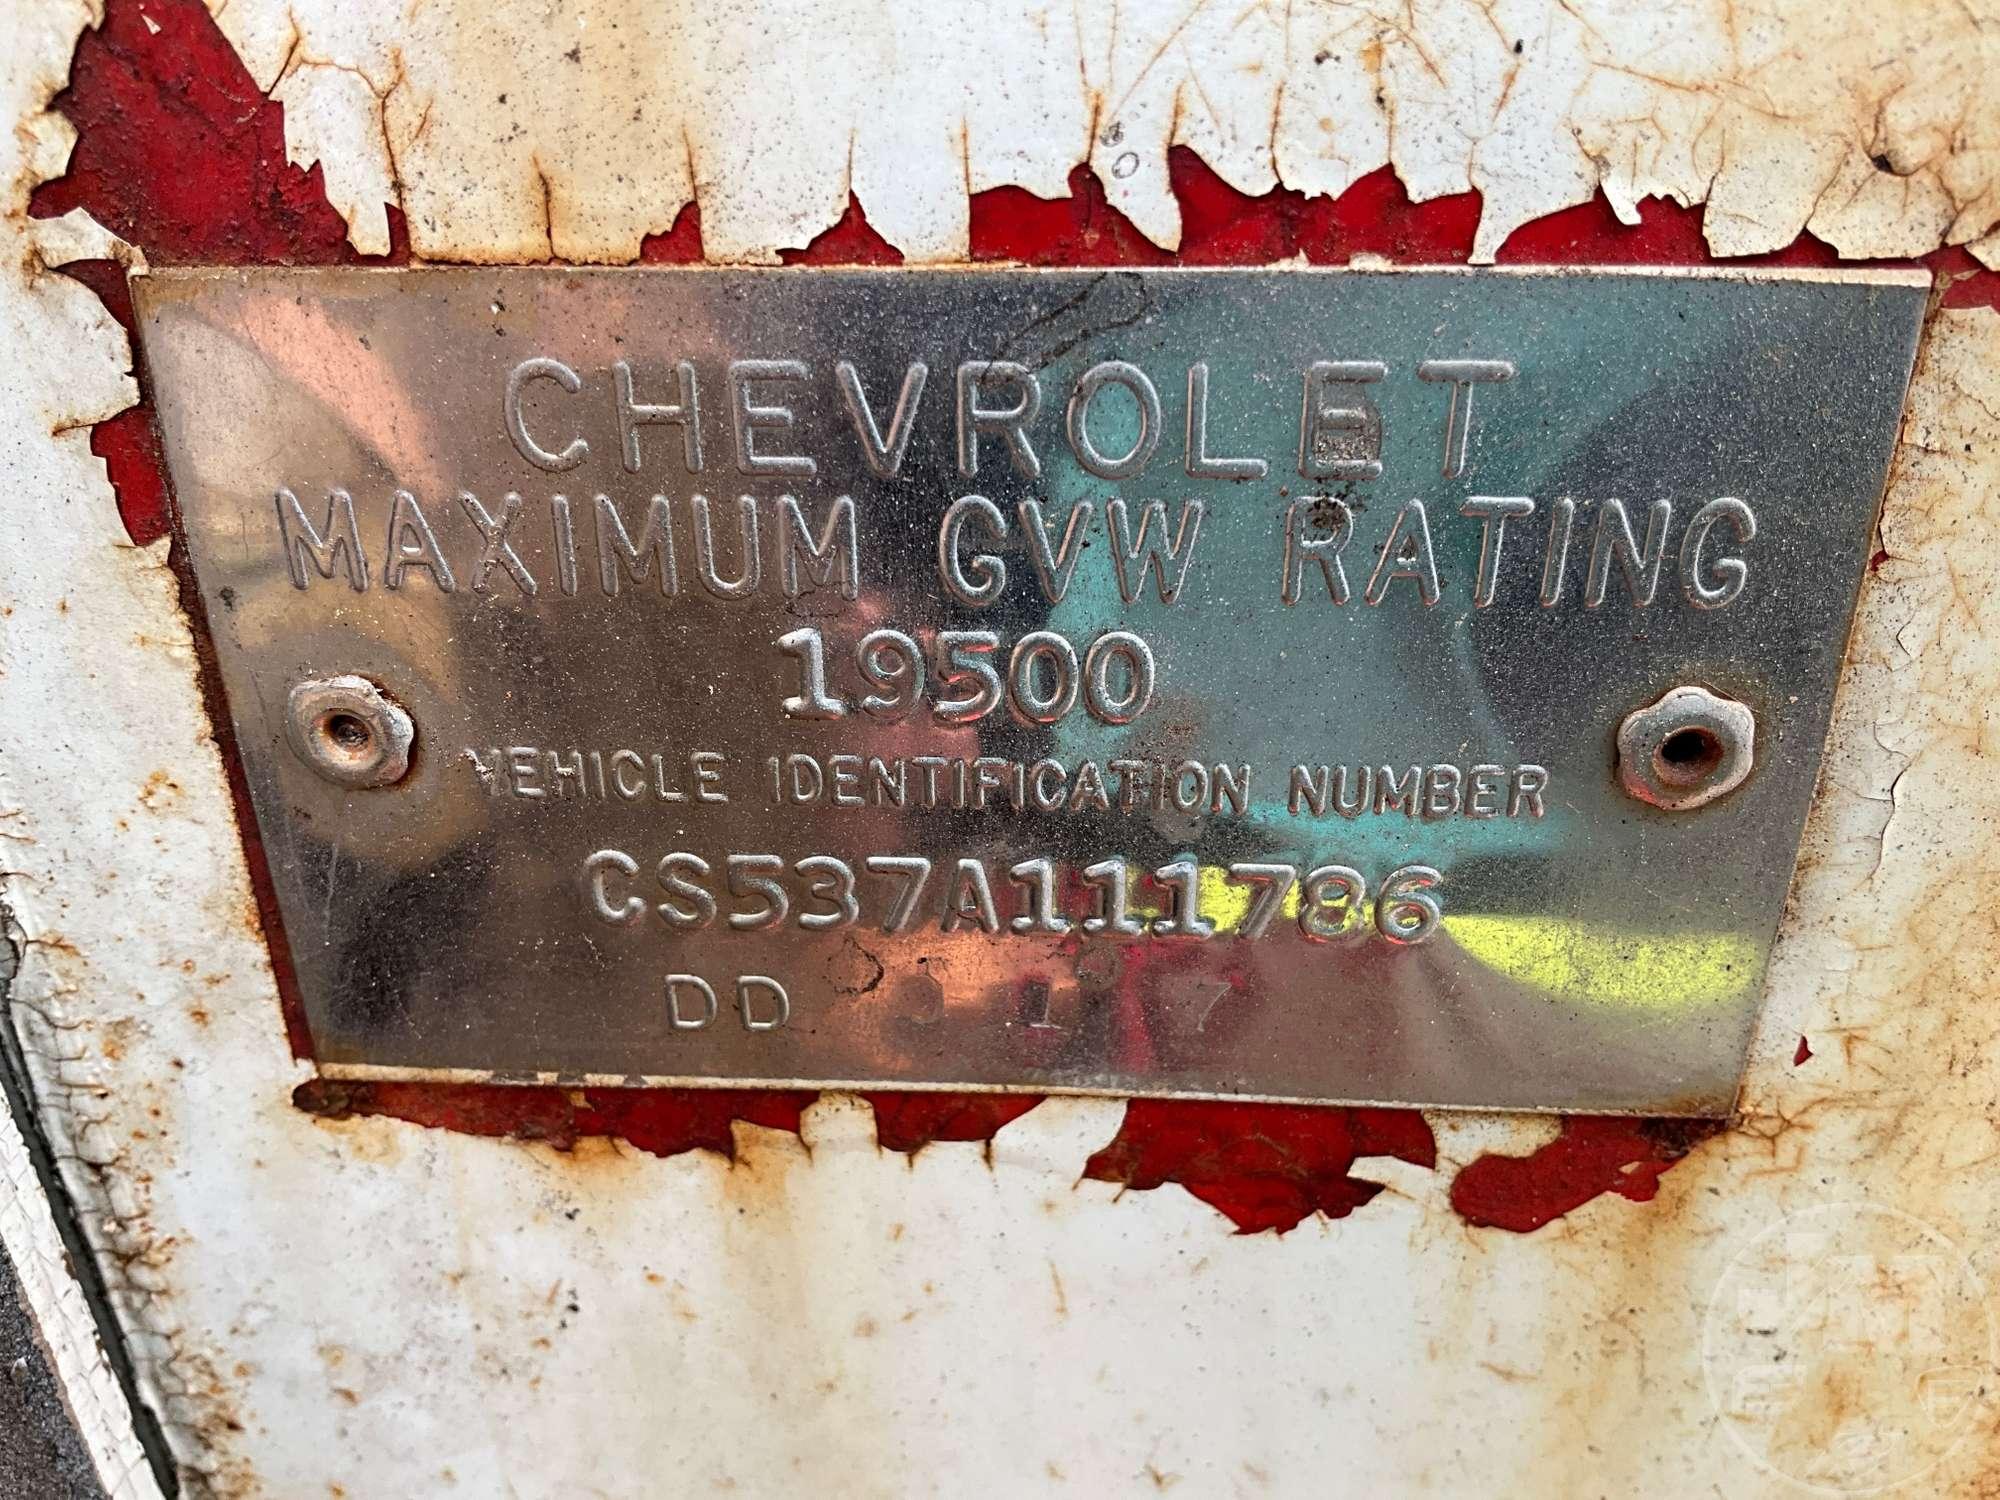 1967 CHEVROLET C50 ROUSTABOUT TRUCK S  VIN: CS537A111786